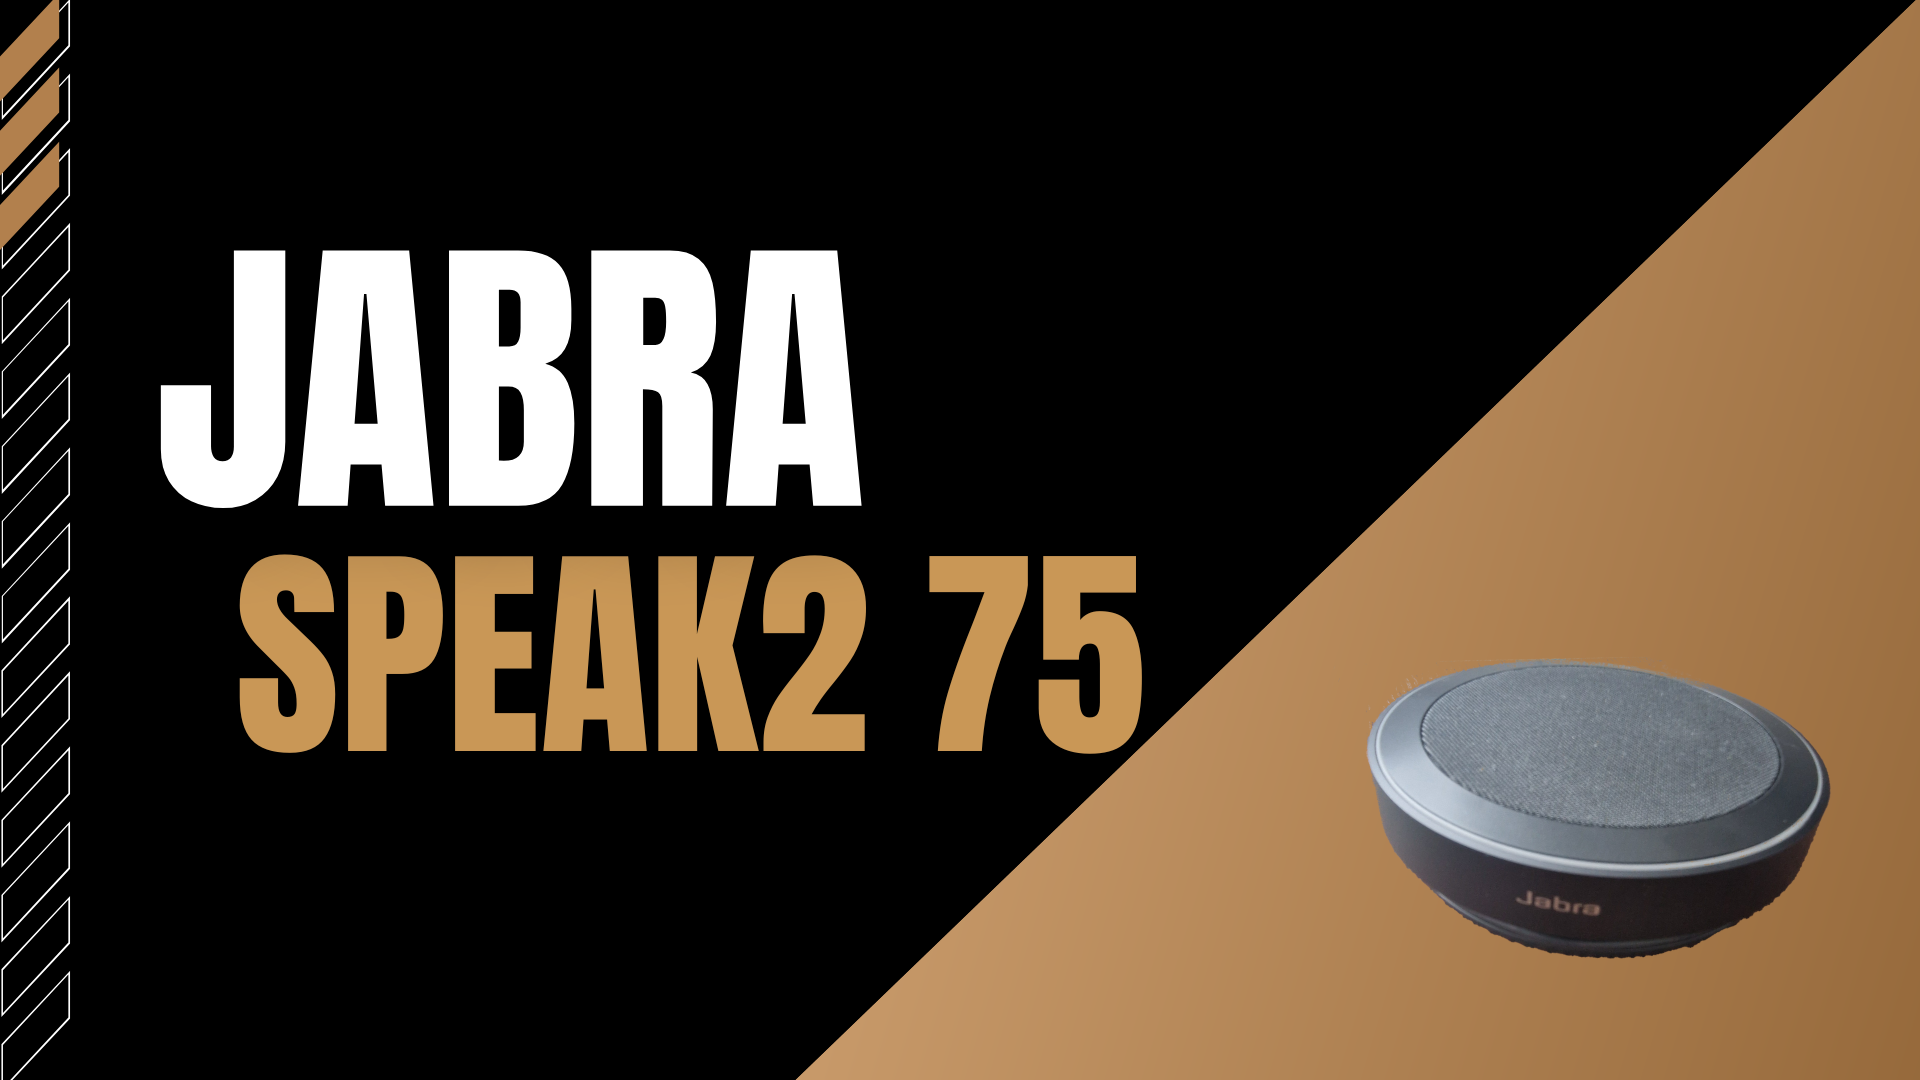 Jabra Speak2 75 review